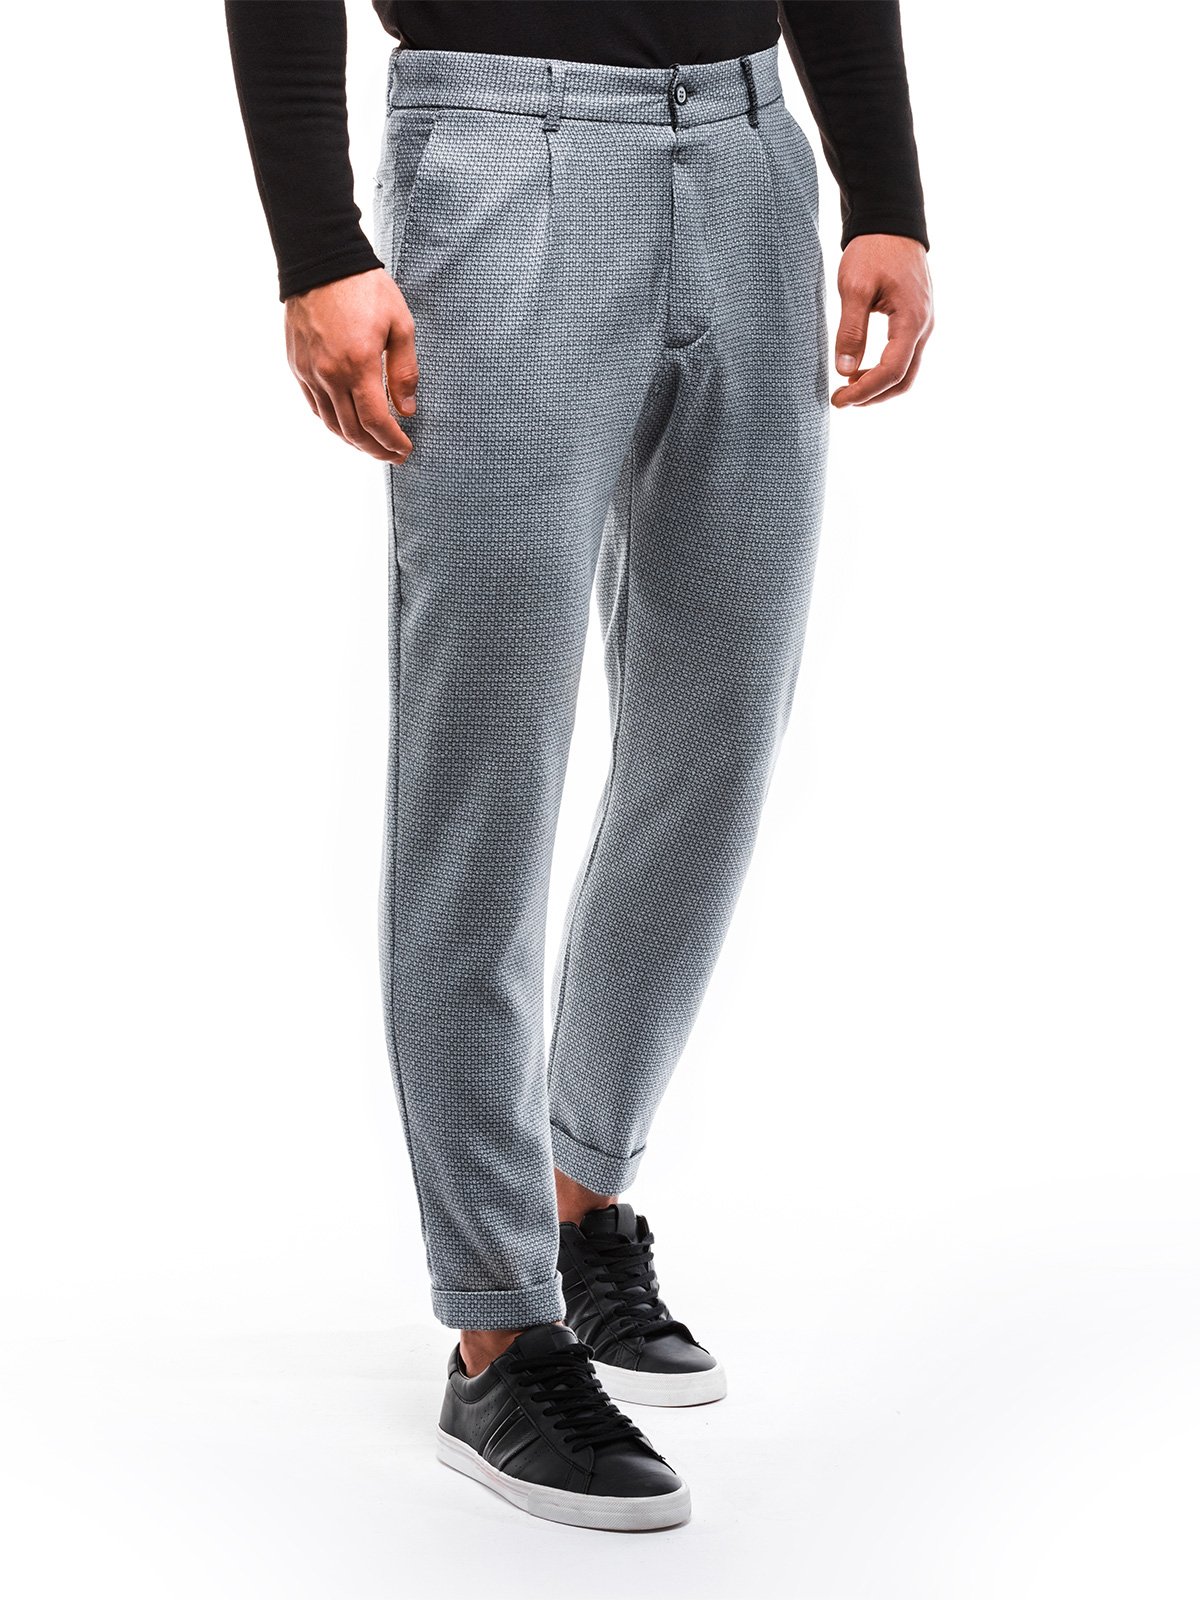 Men's chino pants P869 - grey | MODONE wholesale - Clothing For Men